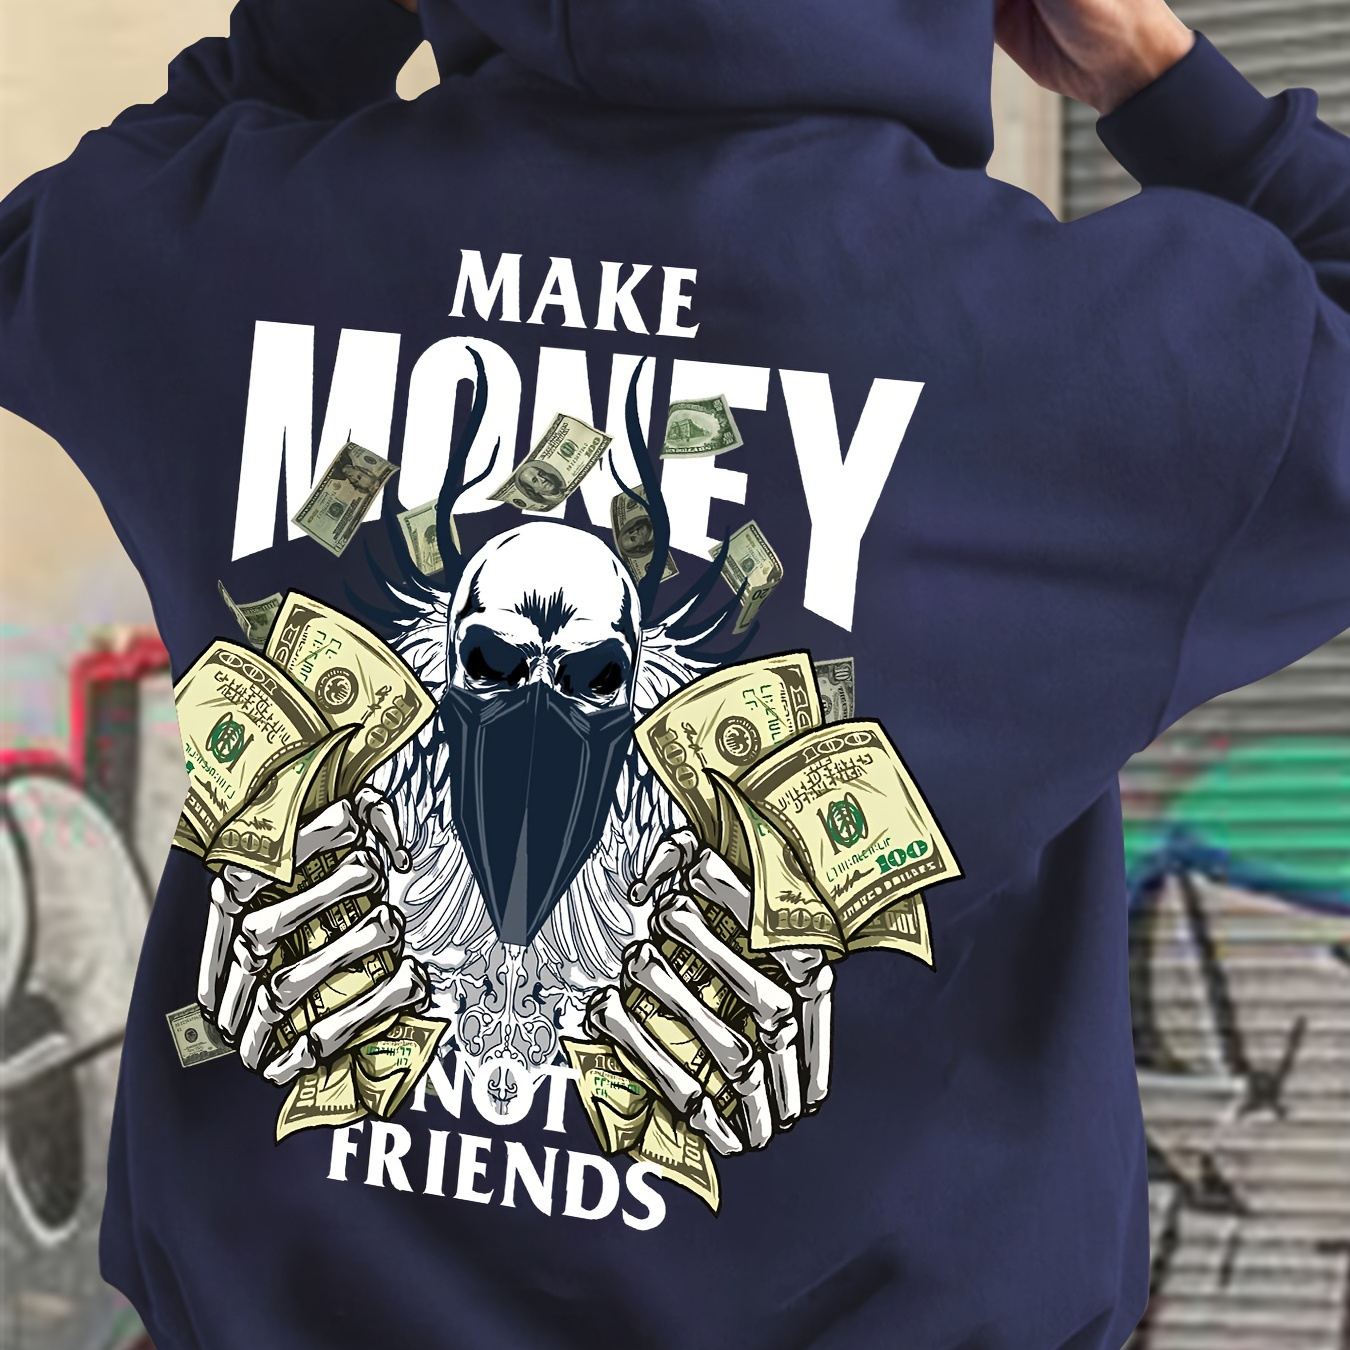 

Make Money Not Friends Print Kangaroo Pocket Hoodie, Casual Long Sleeve Hoodies Pullover Sweatshirt, Men's Clothing, For Fall Winter